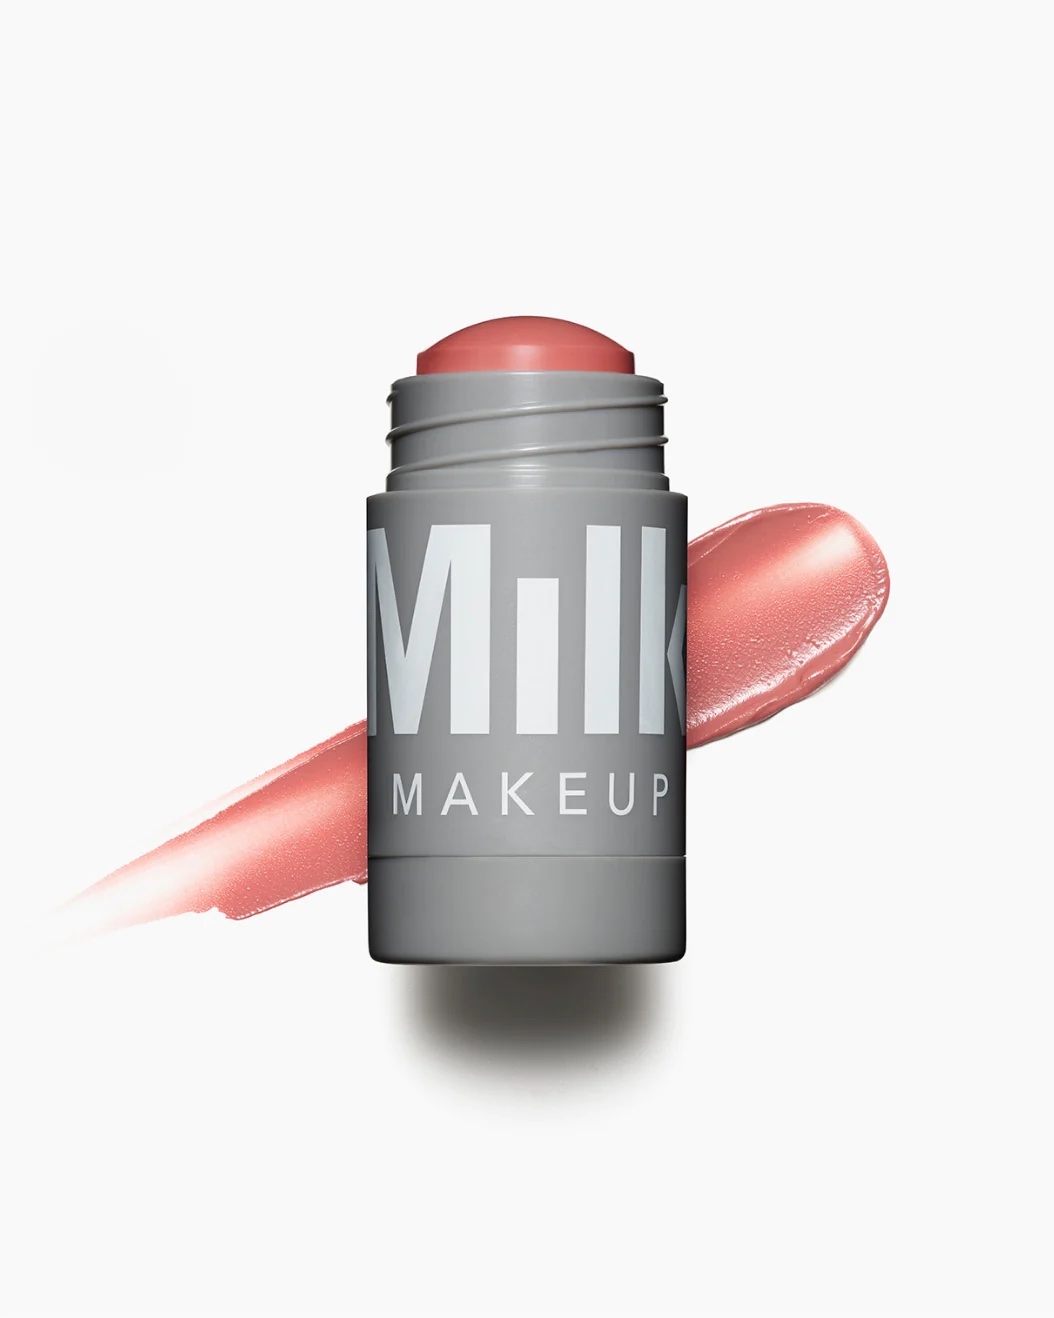 LipstickDay-Content-Image-10